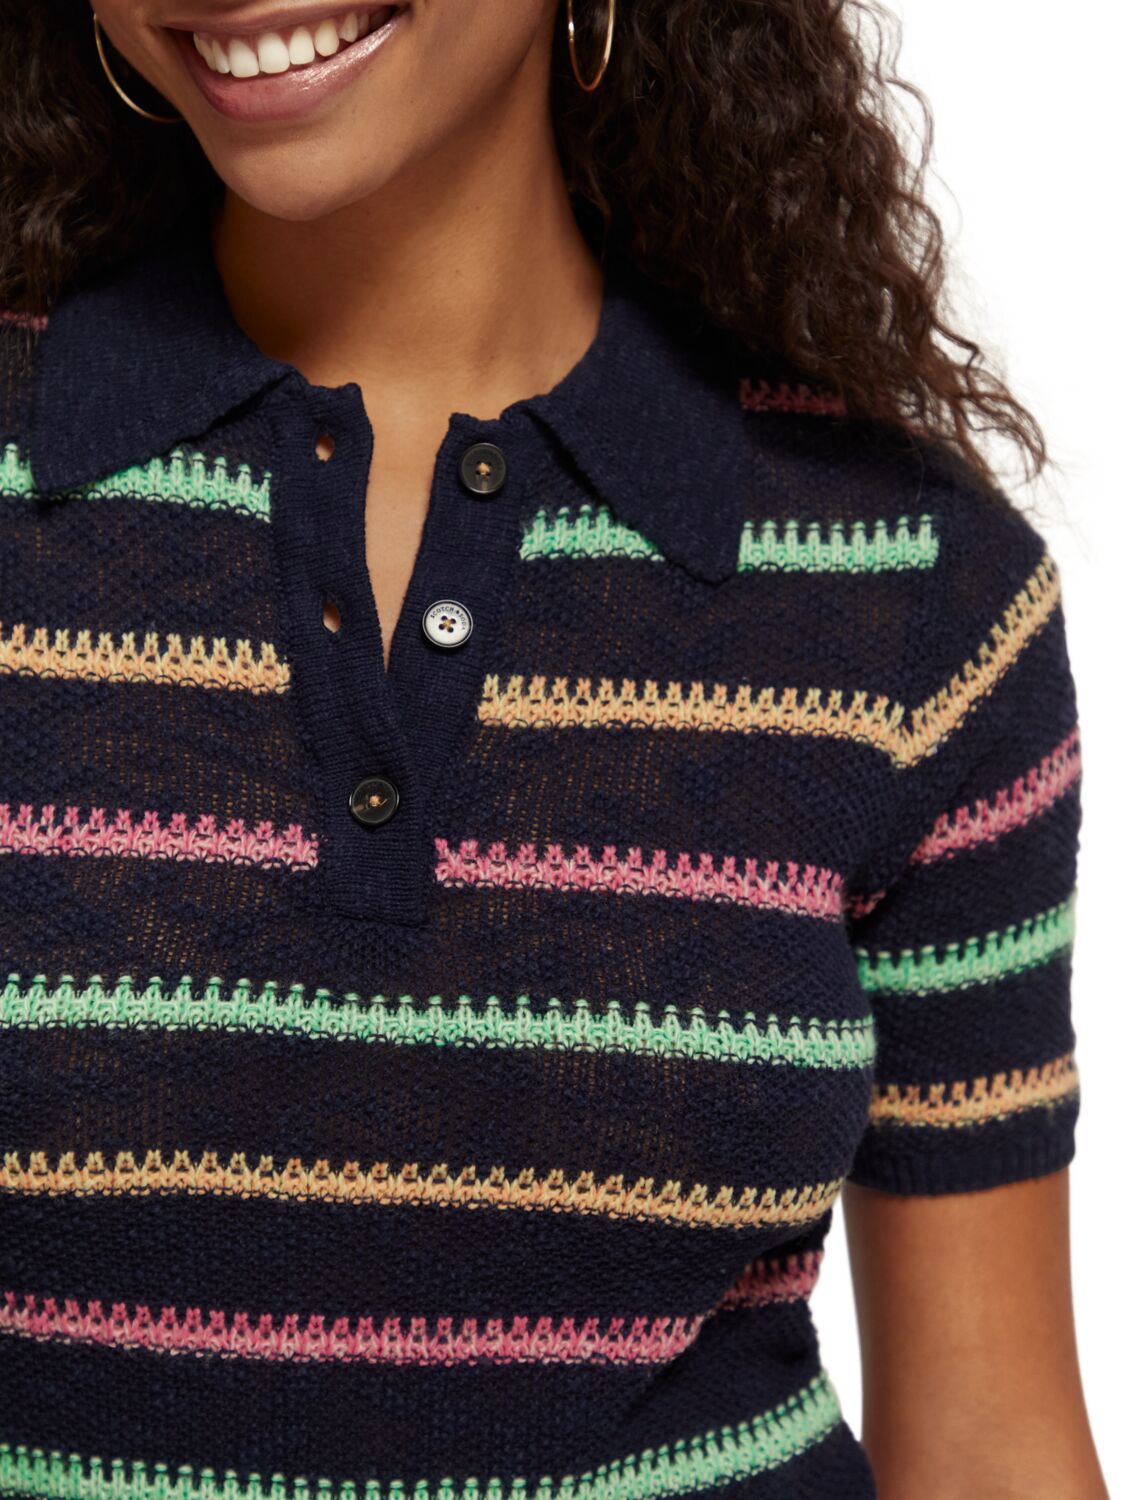 Stripe Knit Pullover